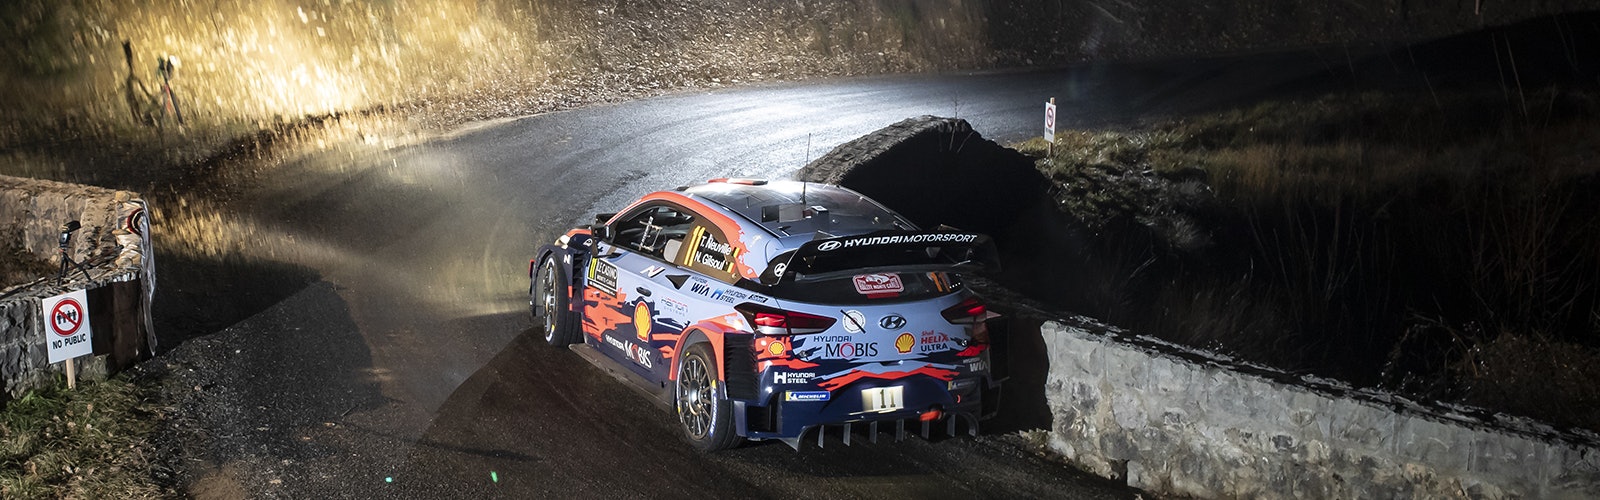 Thierry Neuville Hyundai Monte Carlo WRC 2020